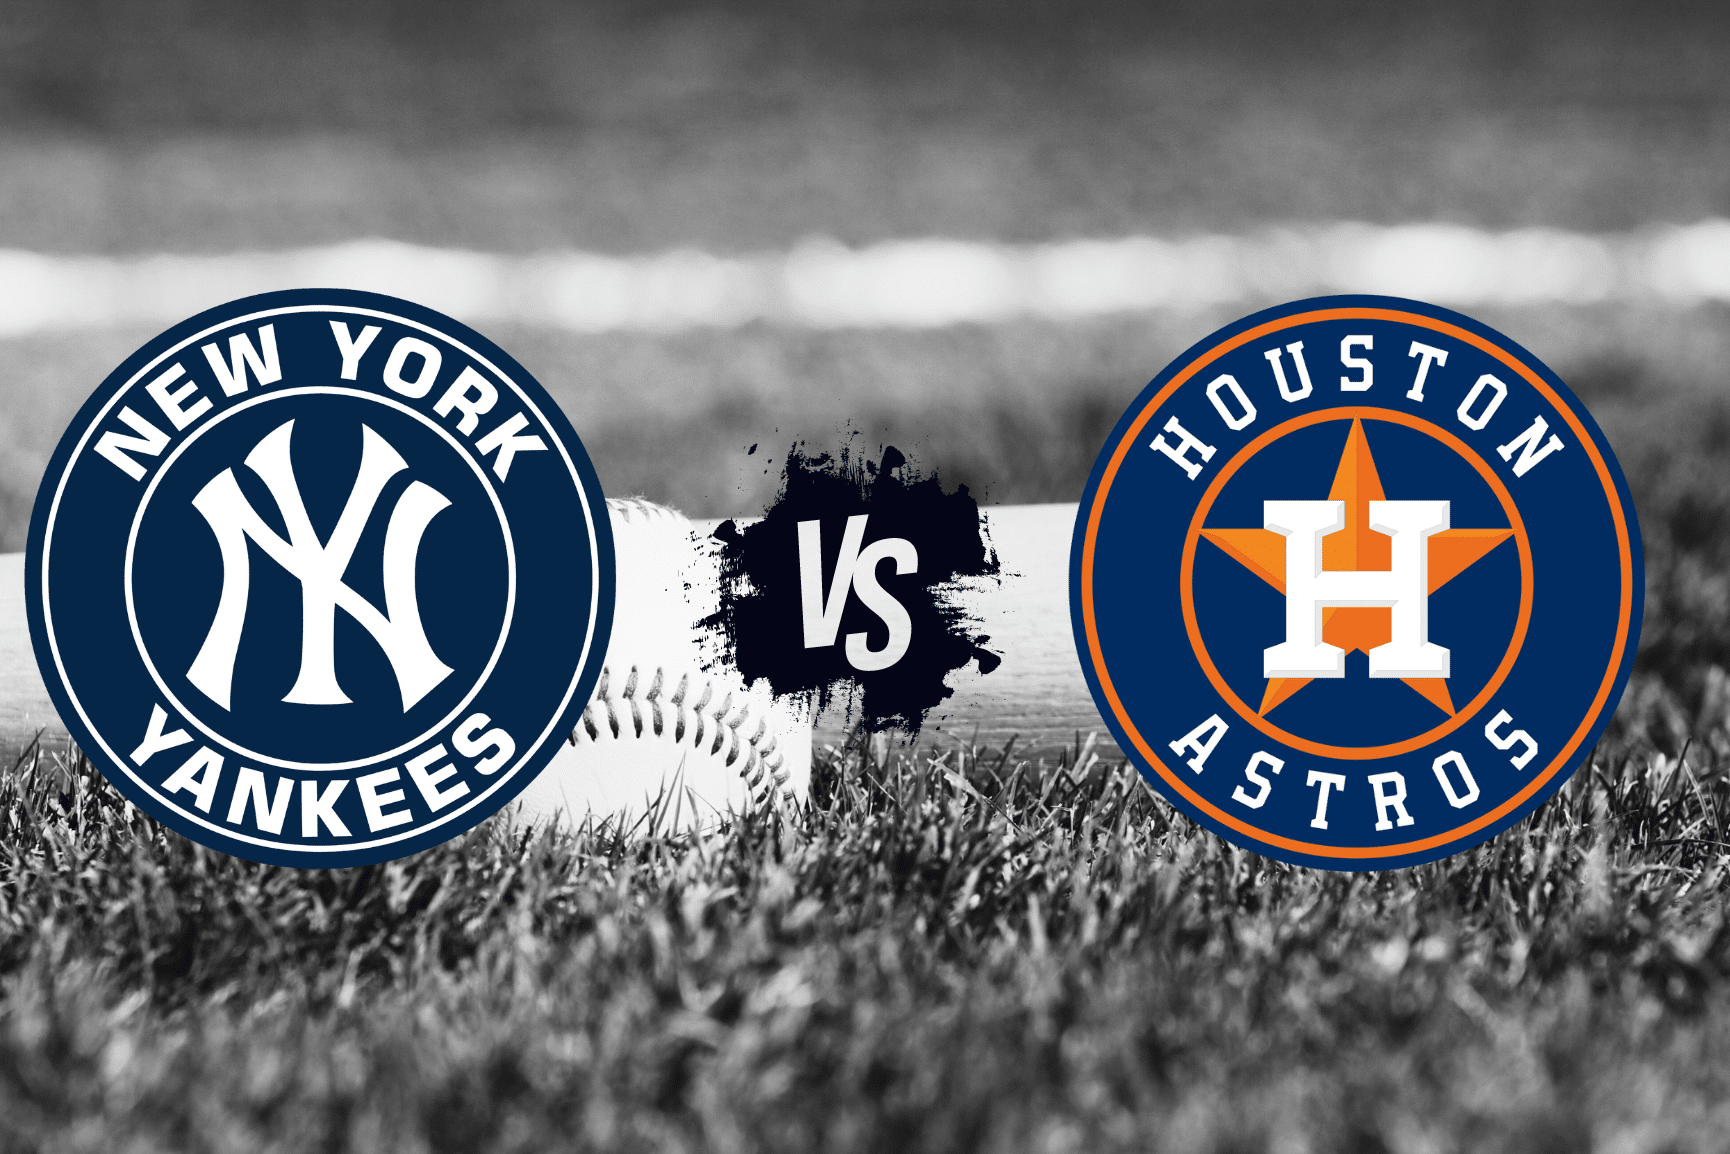 New York Yankees vs. Astros Rivalry : Head to Head